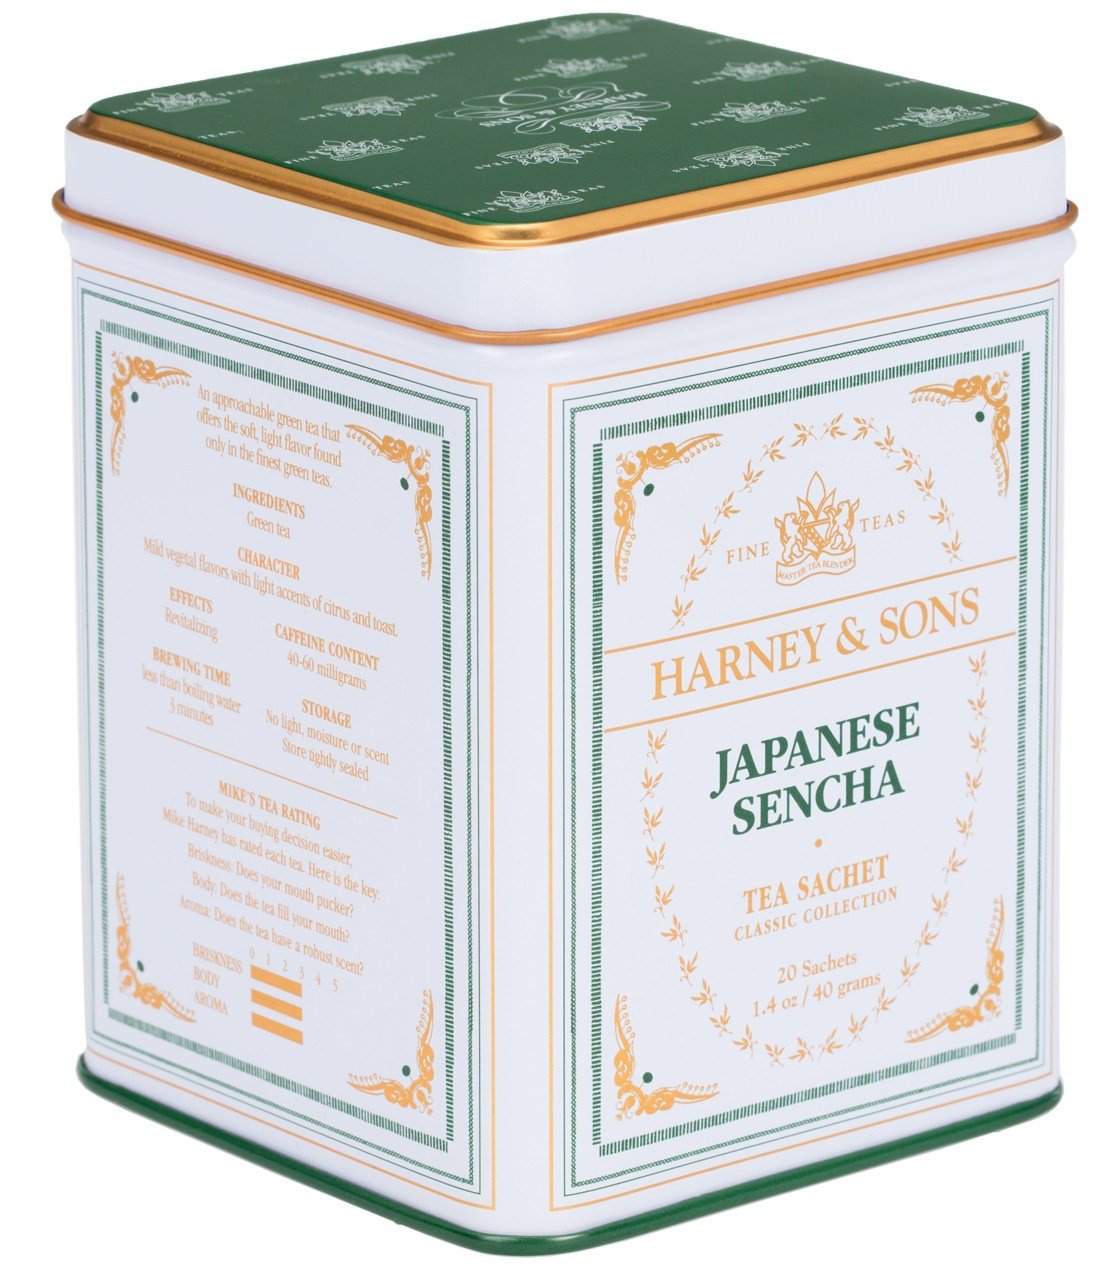 Japanese Sencha - Sachets Classic Tin of 20 Sachets - Harney & Sons Fine Teas